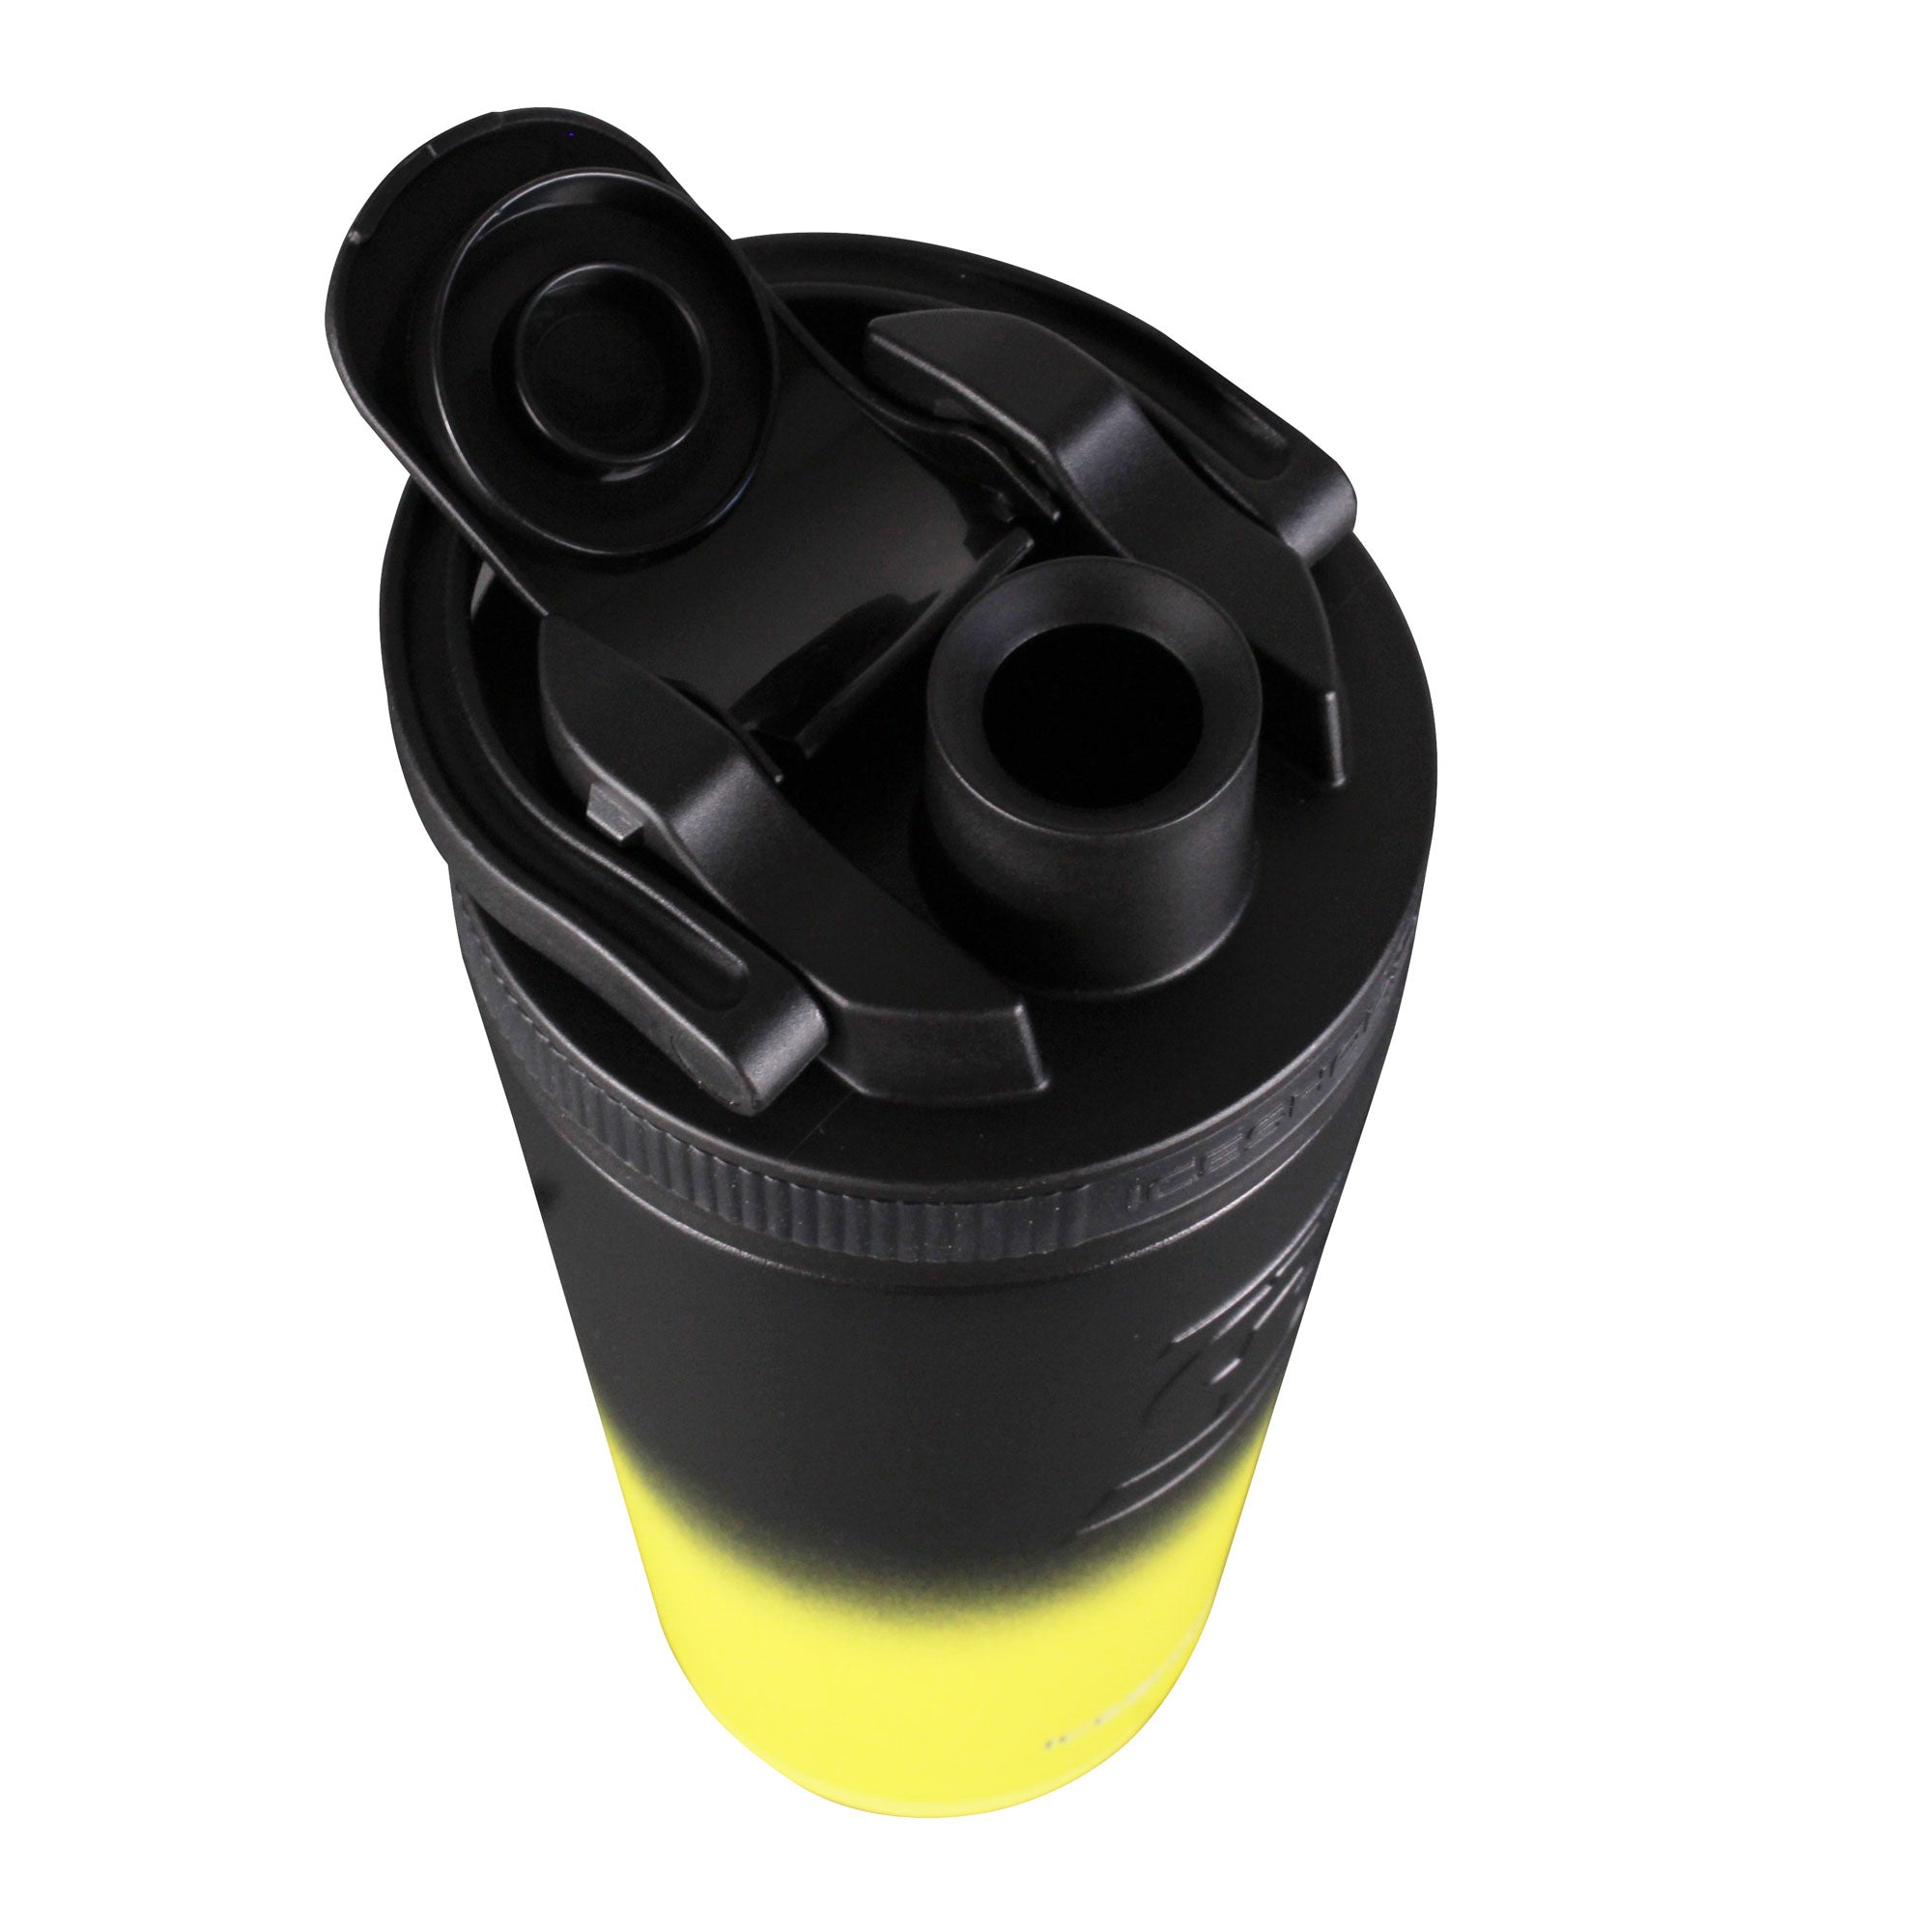 26oz Ice Shaker - Yellow Black Ombre